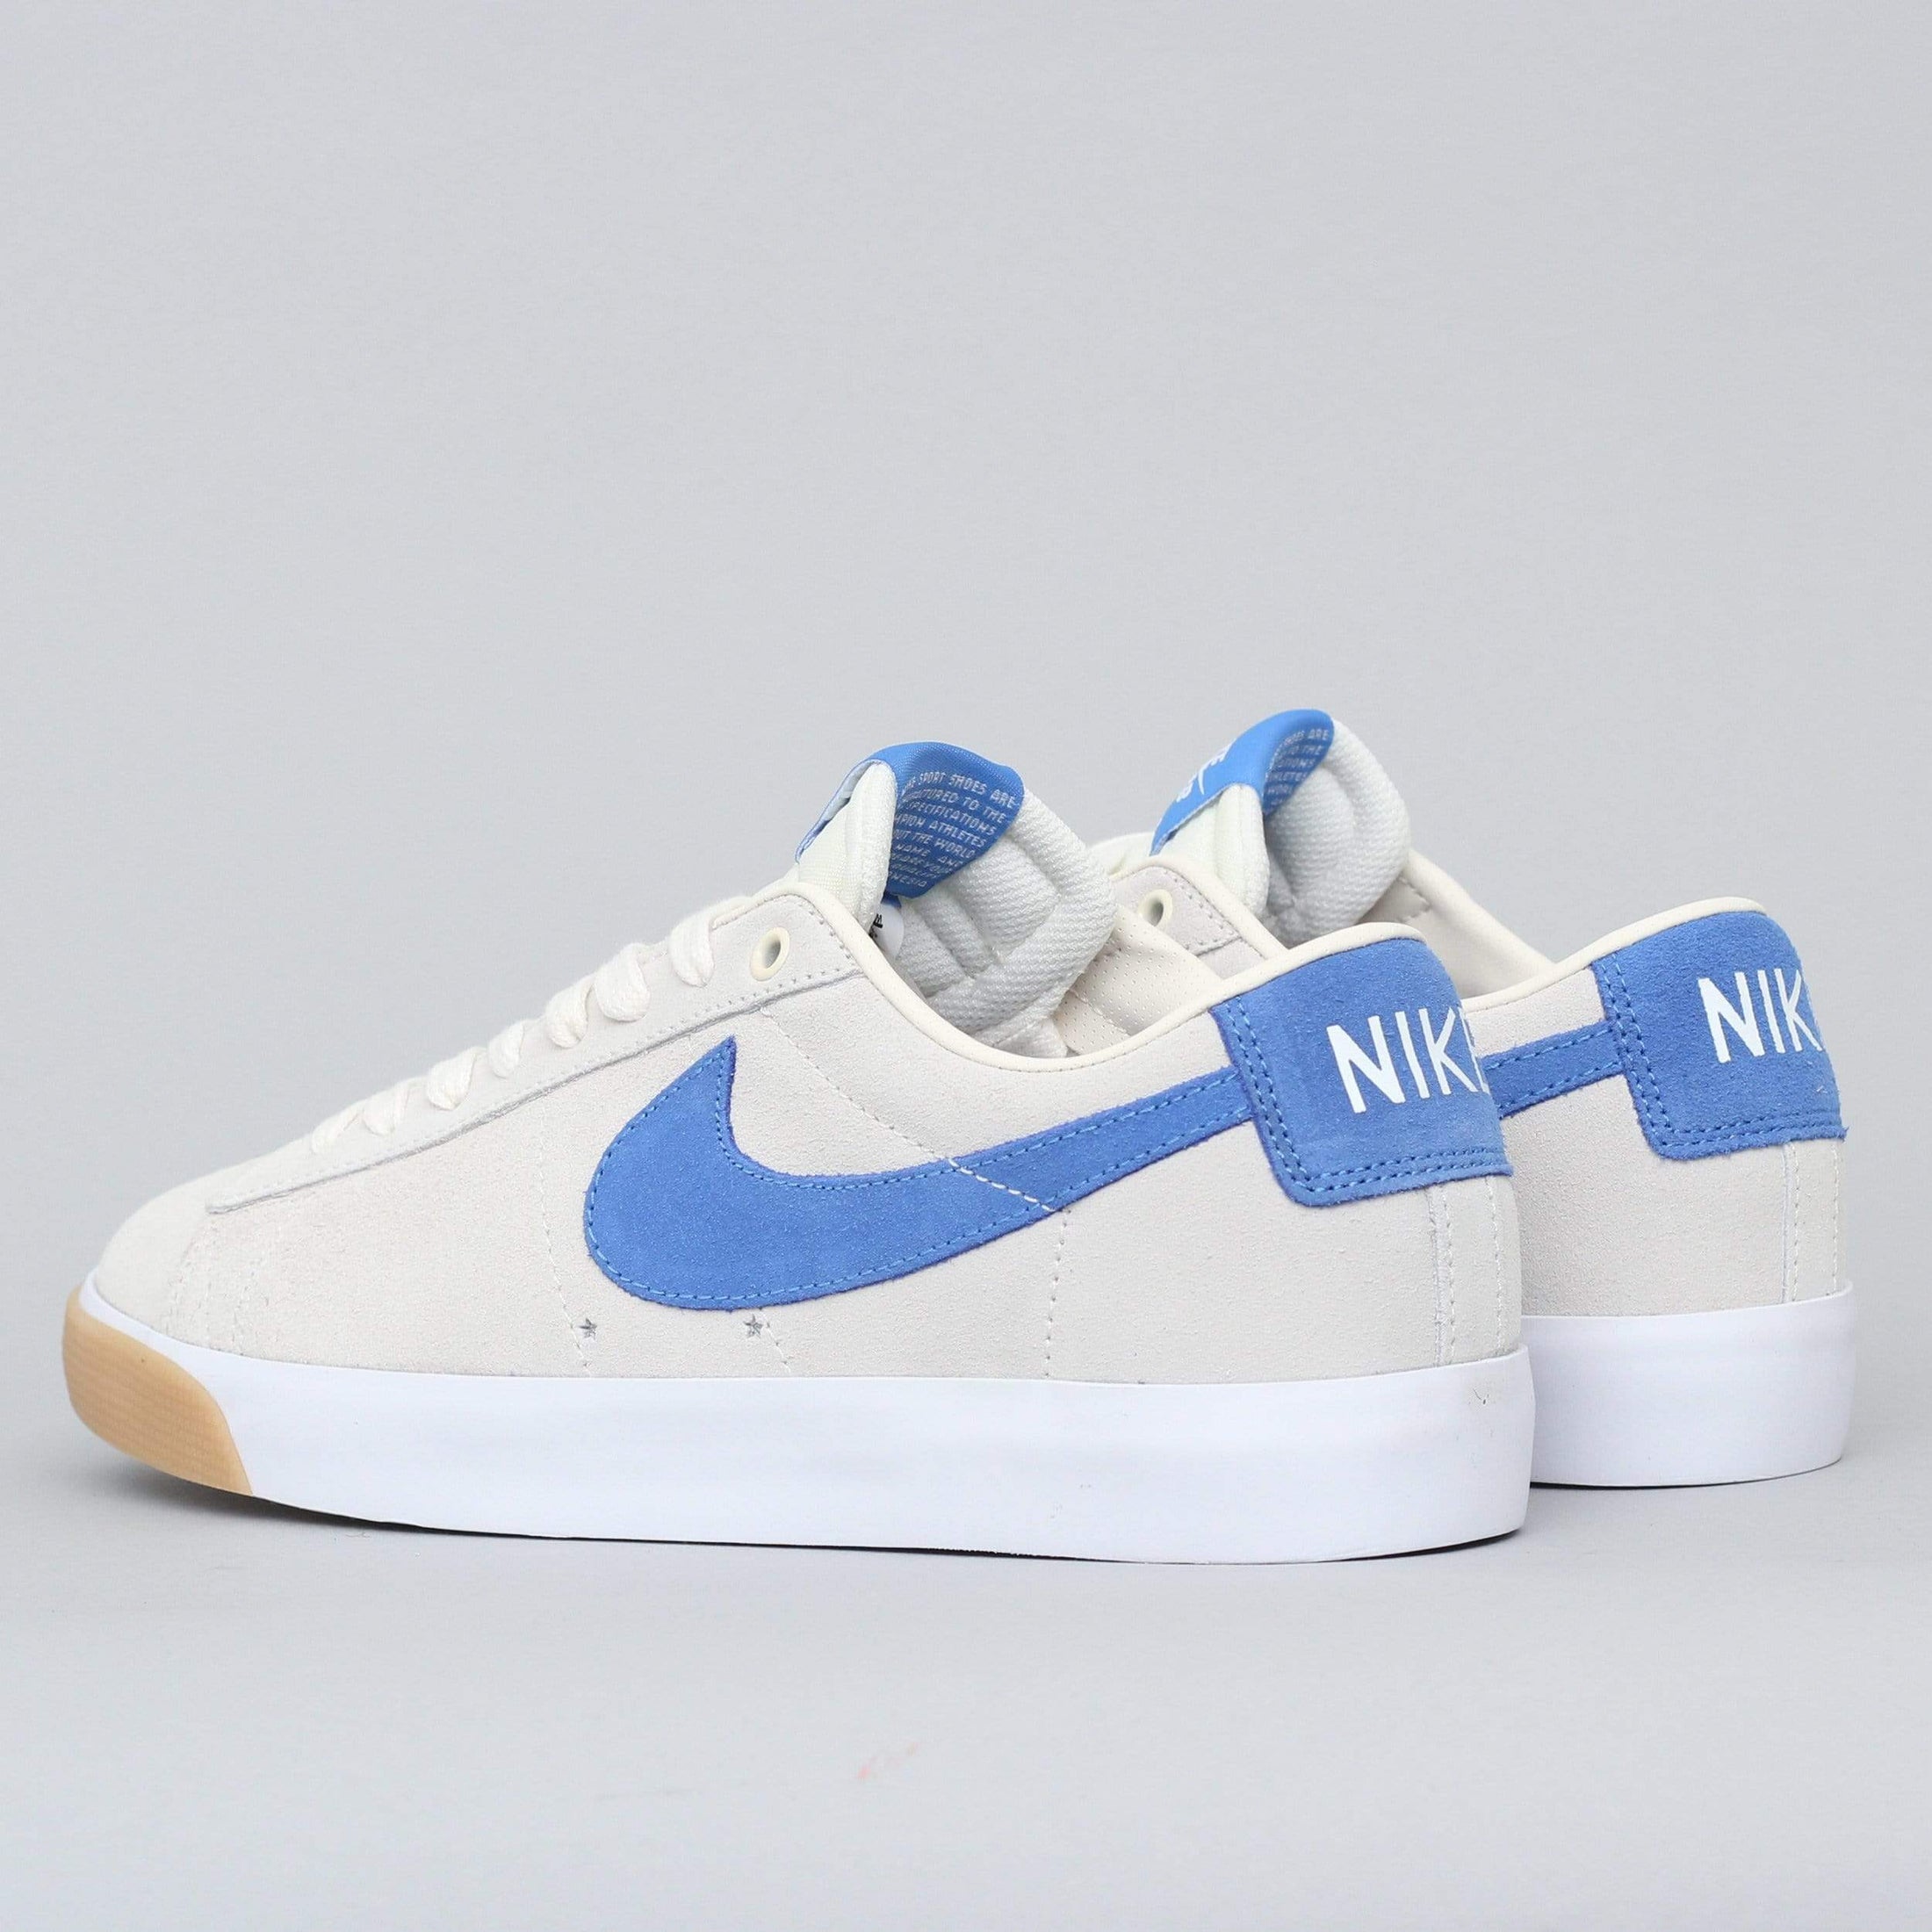 Nike SB Blazer Low GT Shoes Pale Ivory / Pacific Blue - White